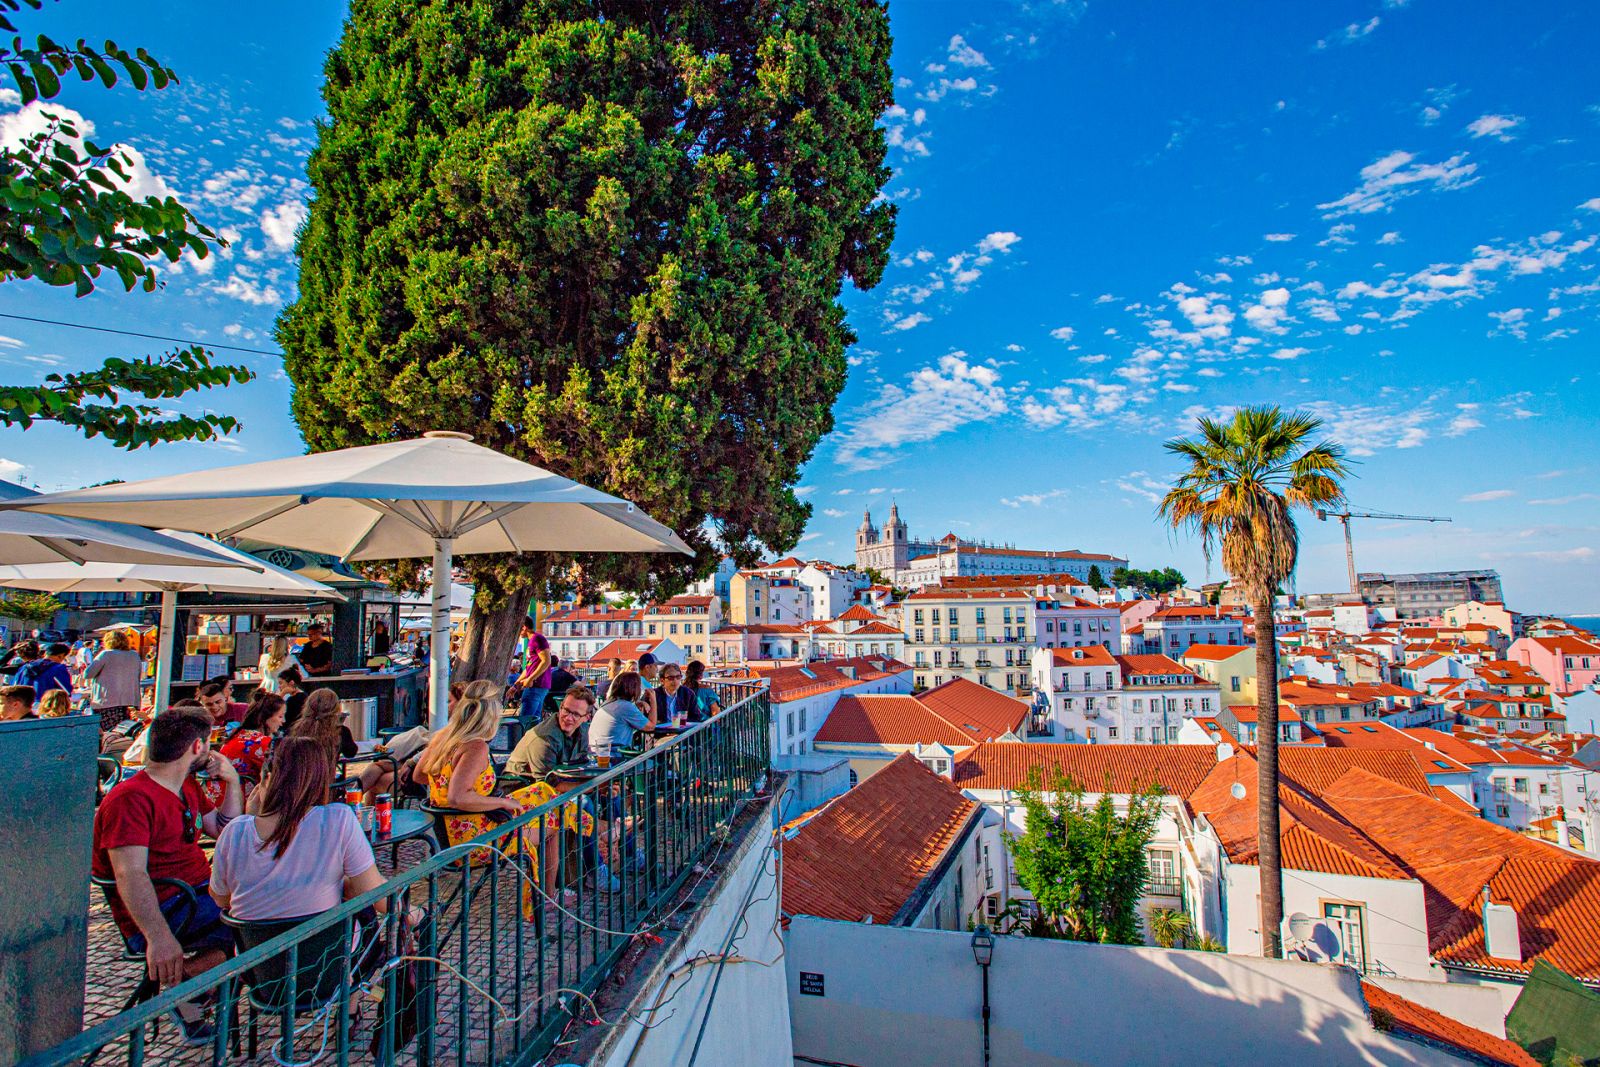 People enjoying summer day by café shop in Lisbon.